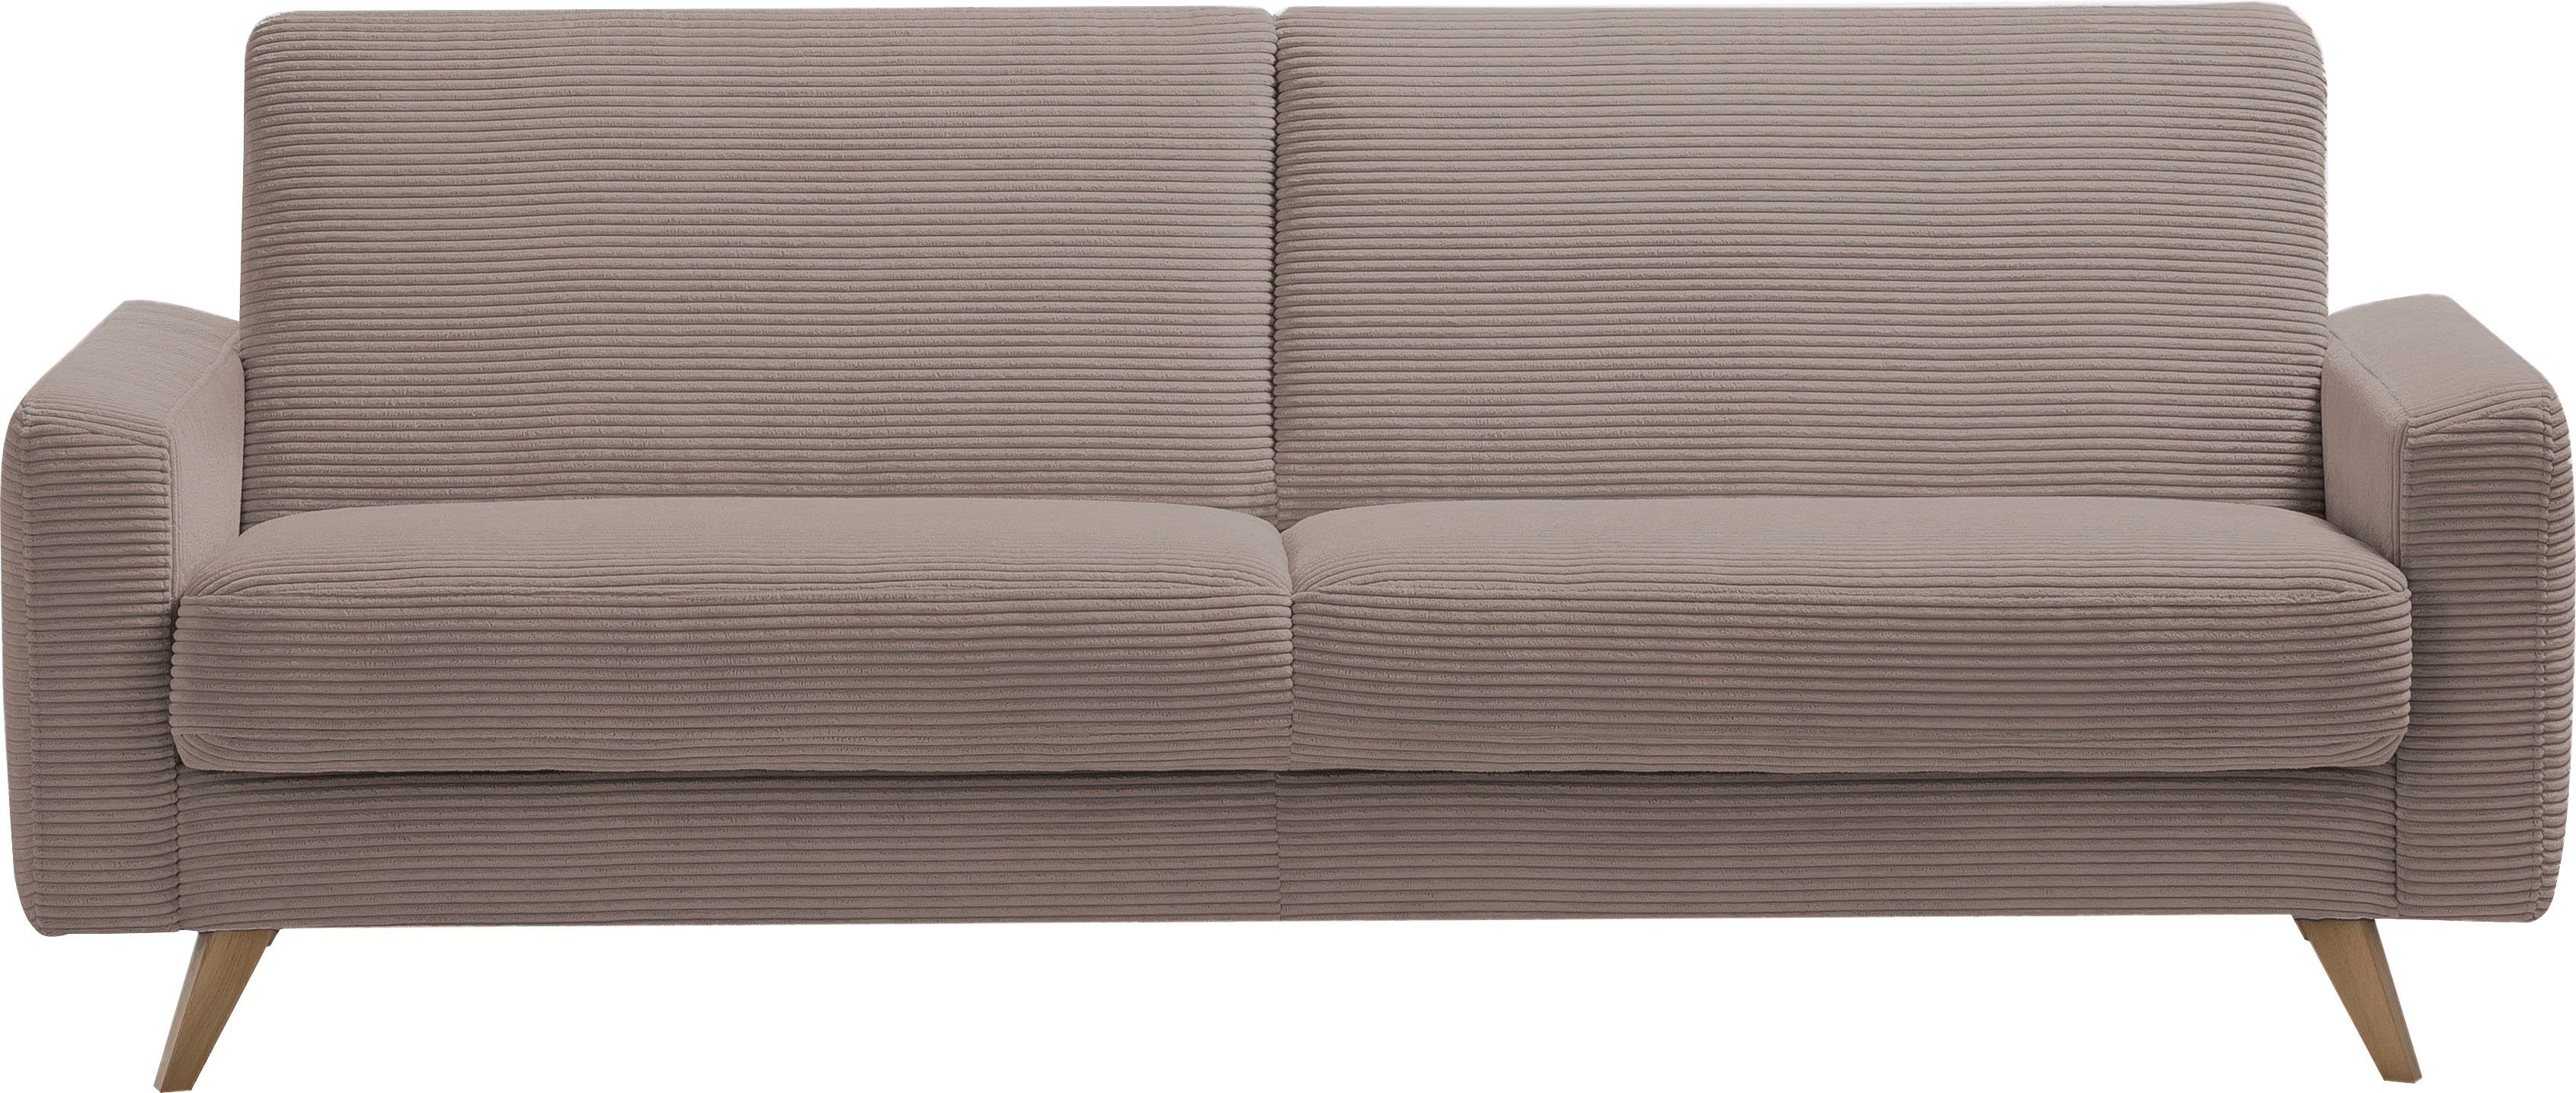 exxpo - sofa fashion Inklusive 3-Sitzer Bettfunktion und Samso, Bettkasten cappucino